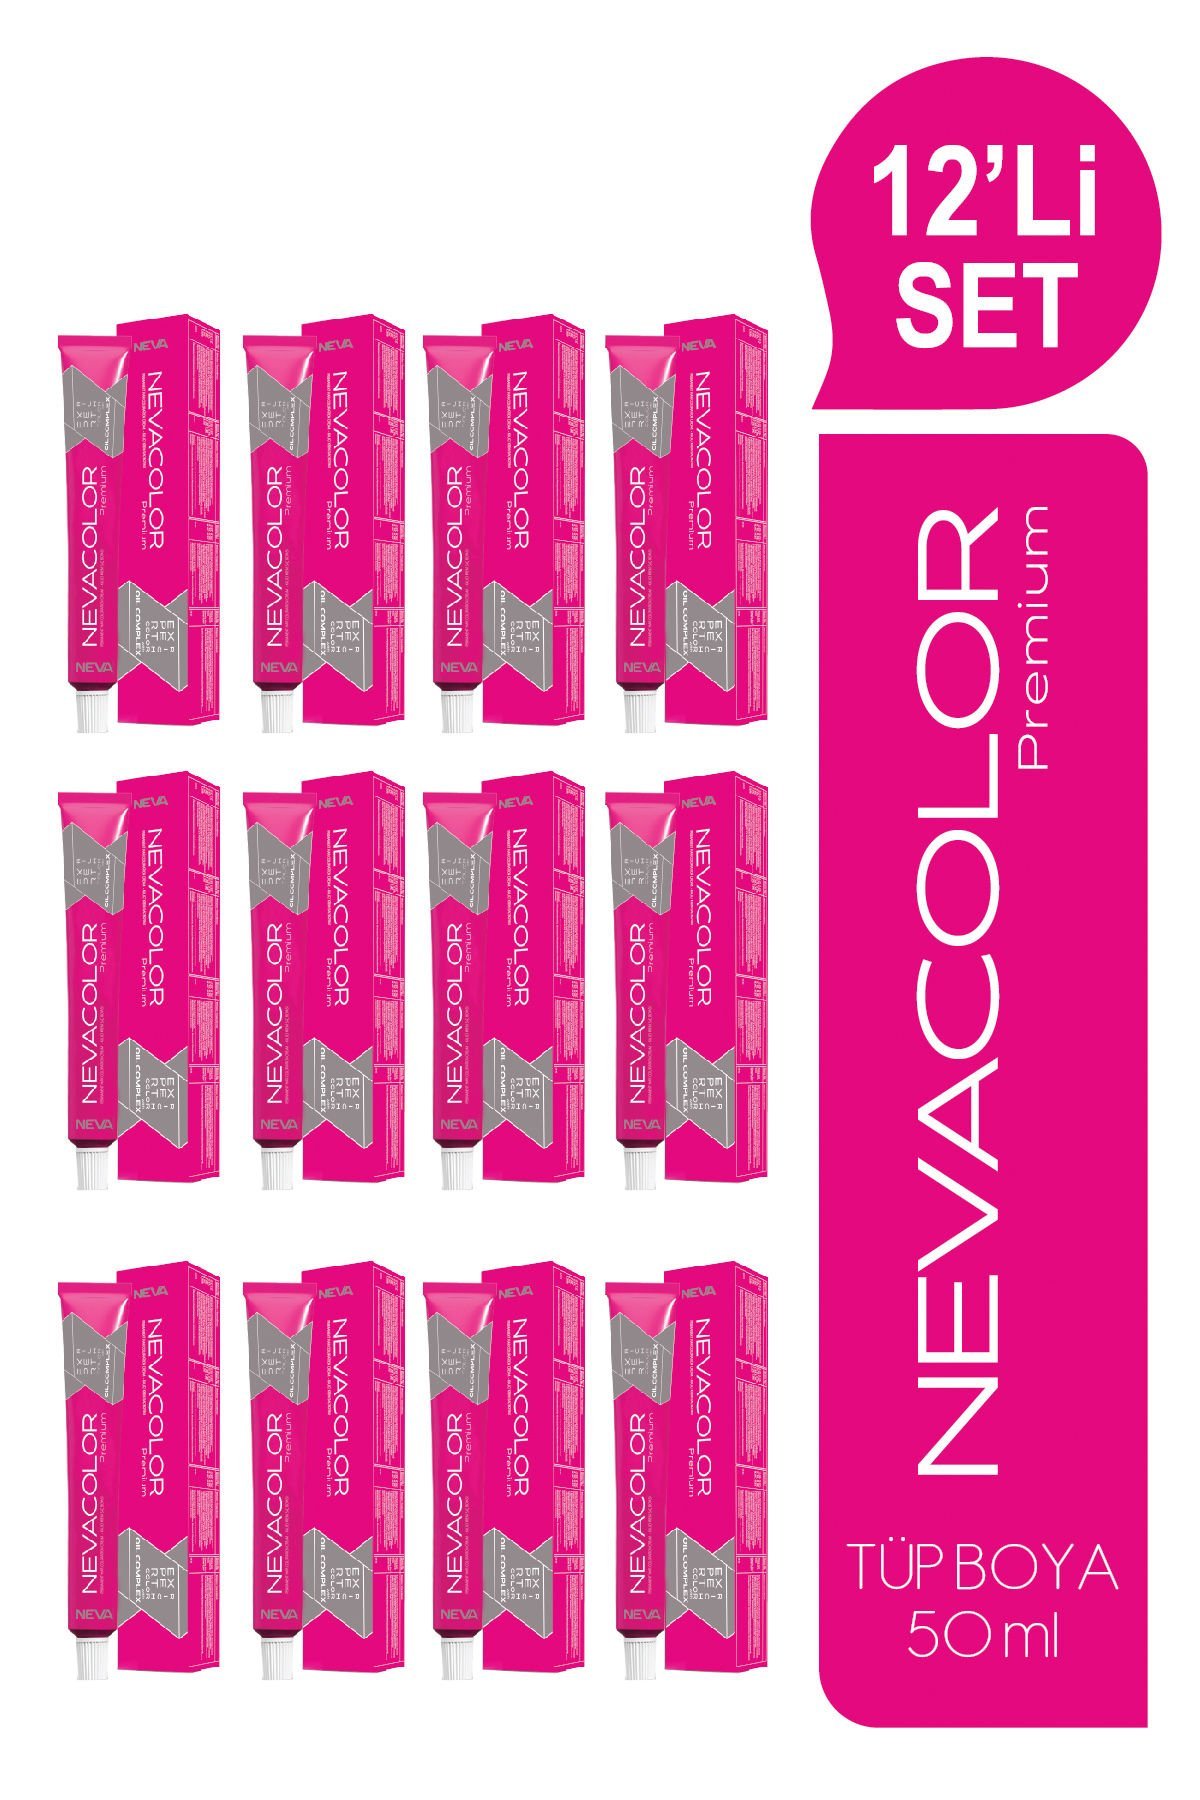 NEVACOLOR Premium 12'Lİ SET  6.7 ÇİKOLATA KAHVE Kalıcı Krem Saç Boyası (50ml x 12 adet)